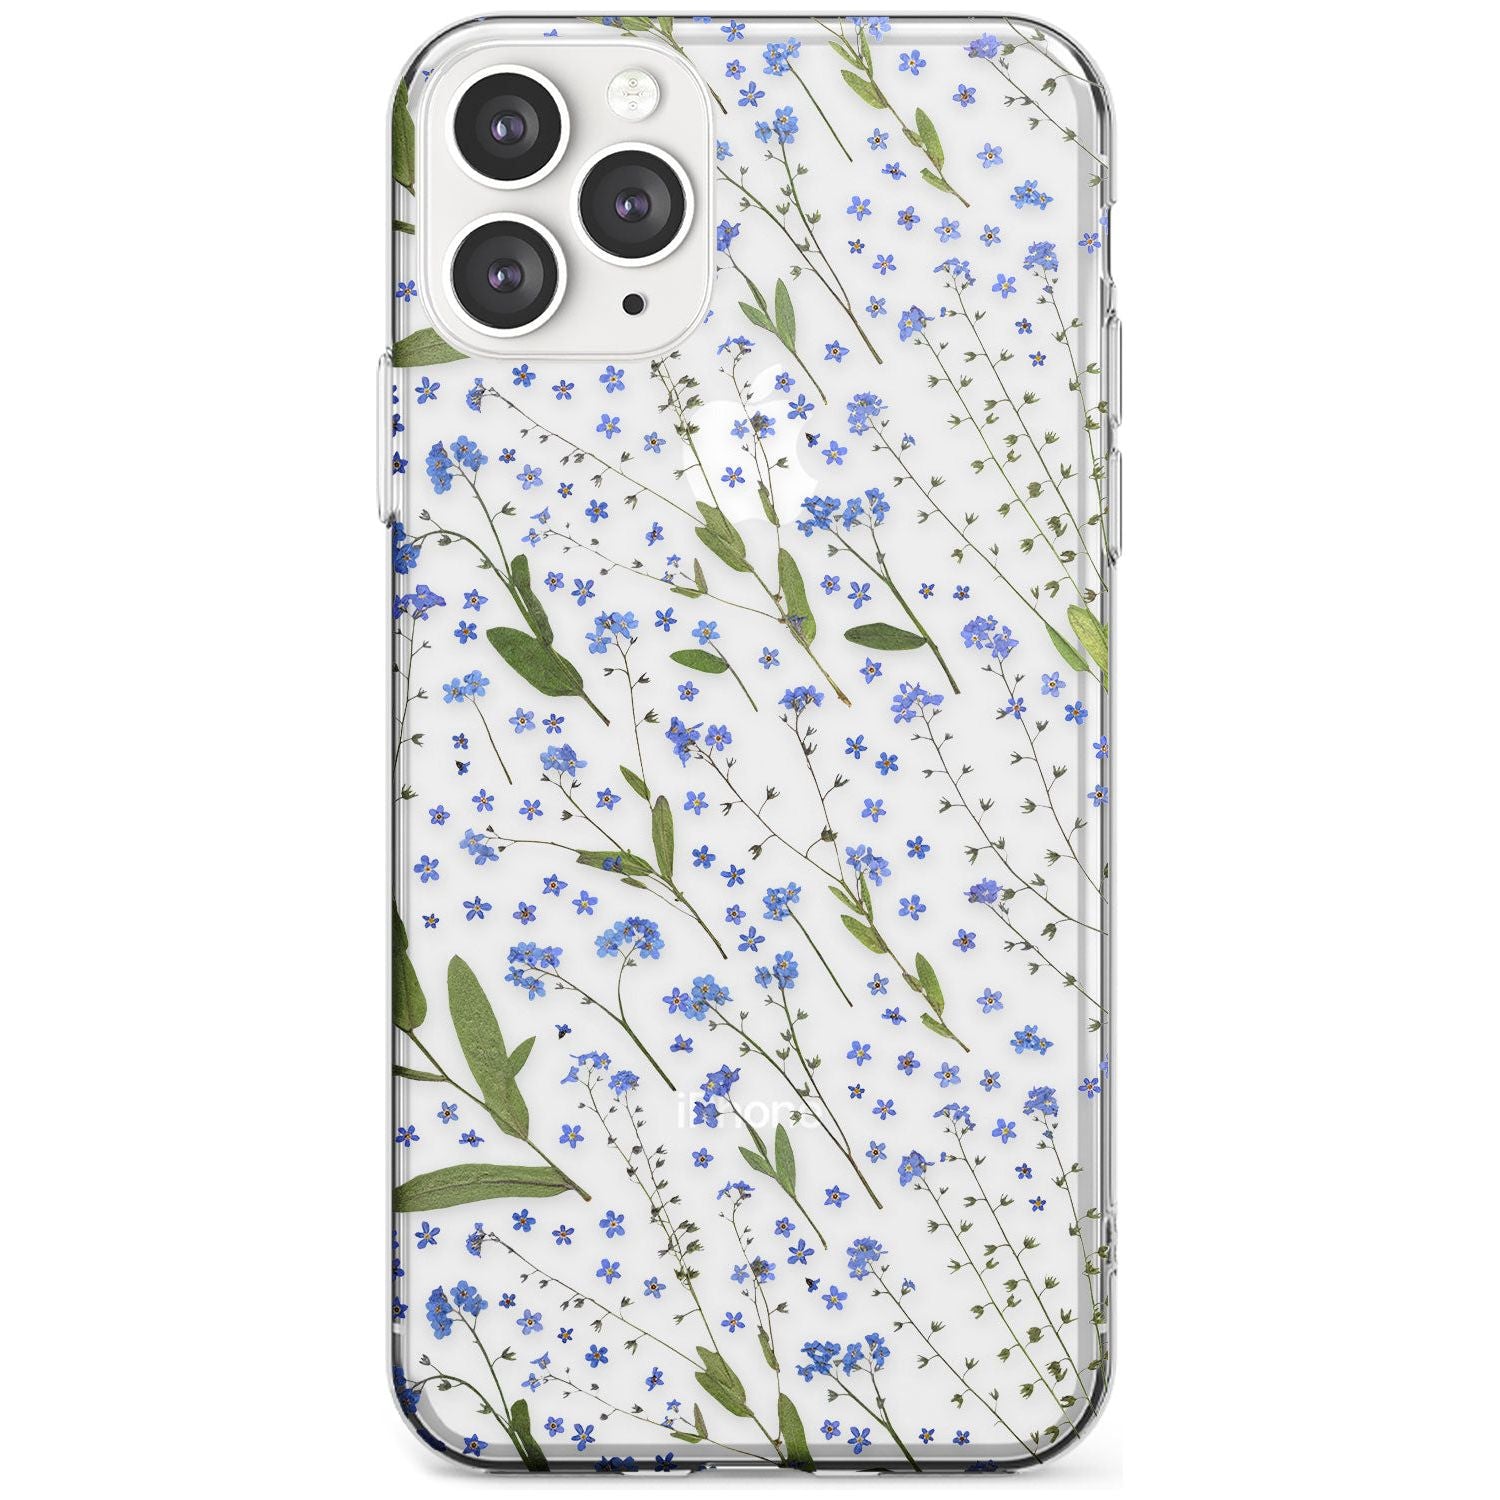 Blue Wild Flower Design Slim TPU Phone Case for iPhone 11 Pro Max